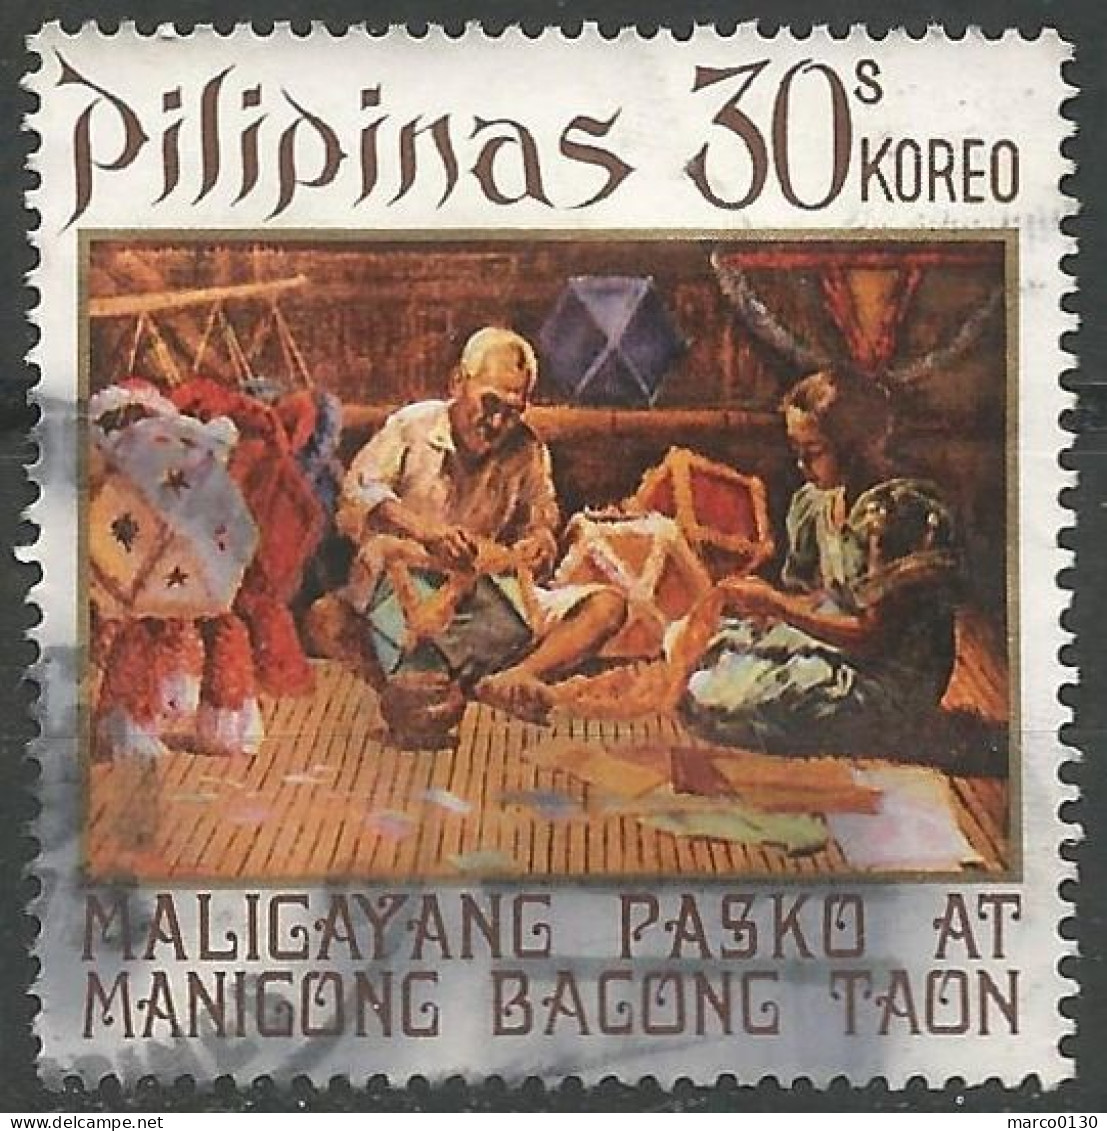 PHILIPPINES N° 903 OBLITERE - Philippines